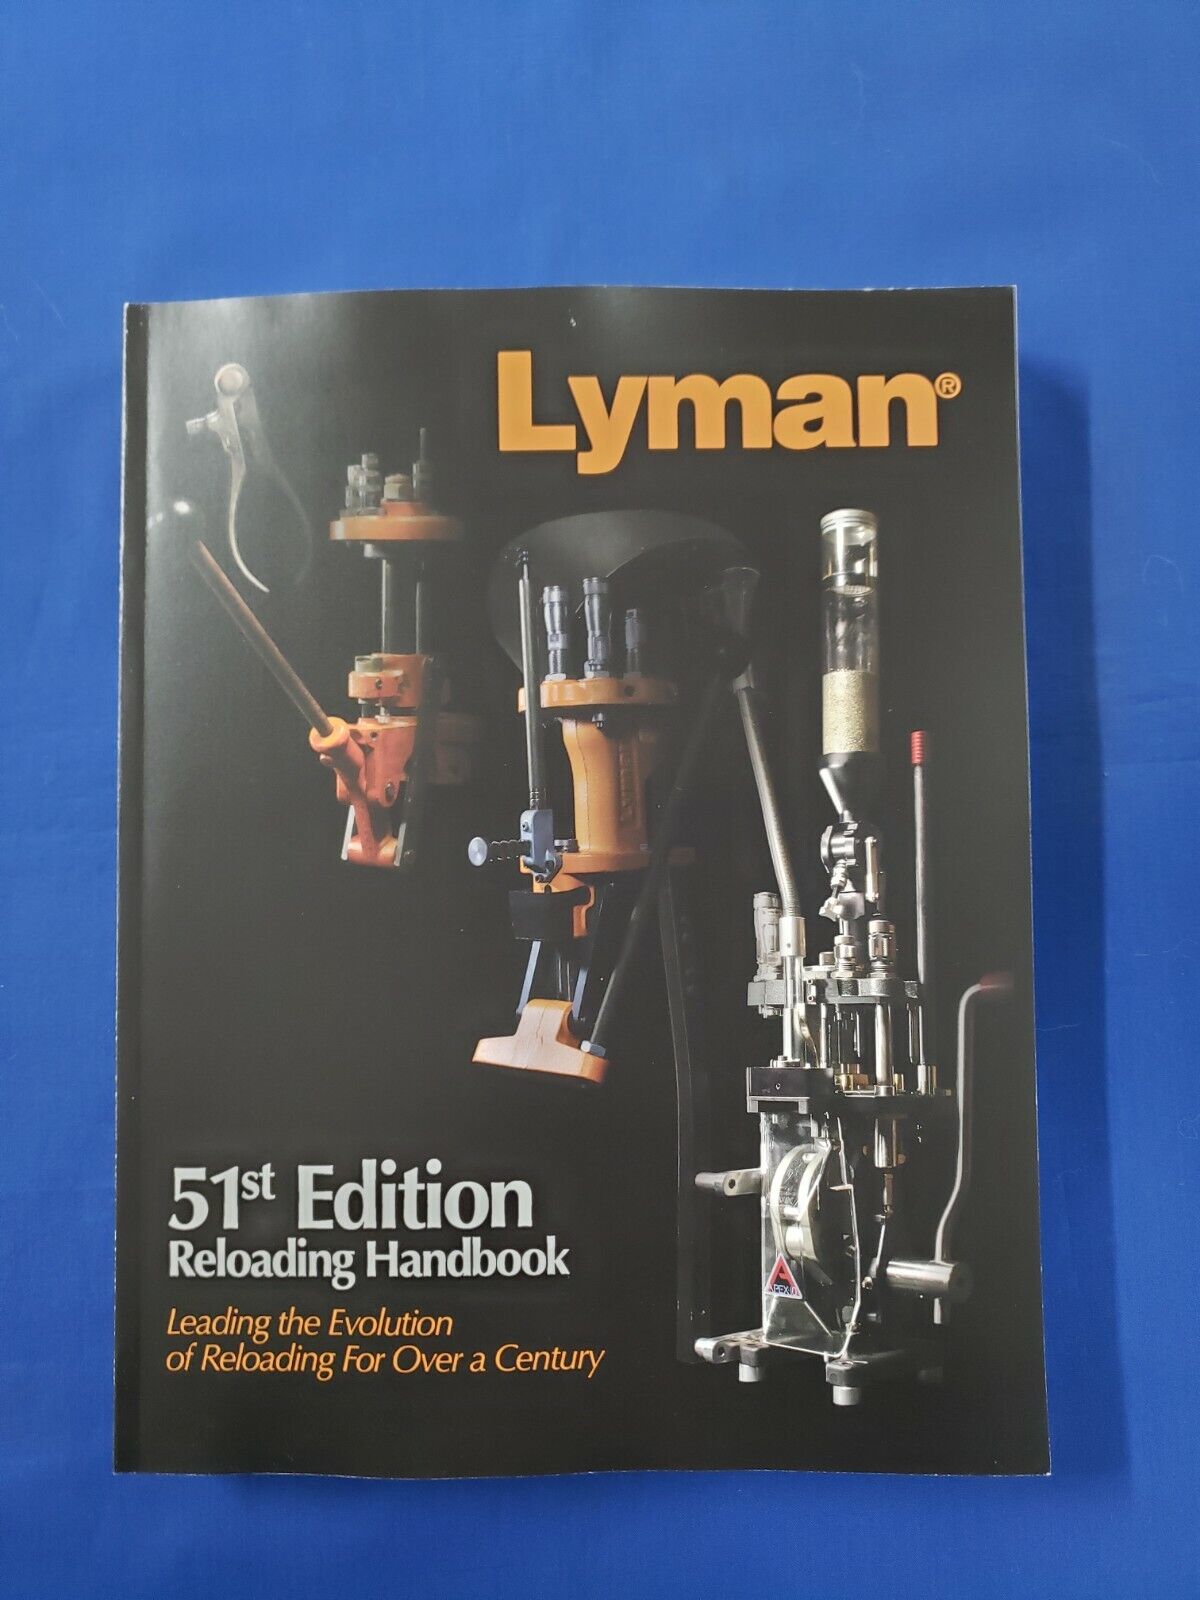 Lyman 51st Edition Reloading Handbook Manual Soft Cover # 9816053